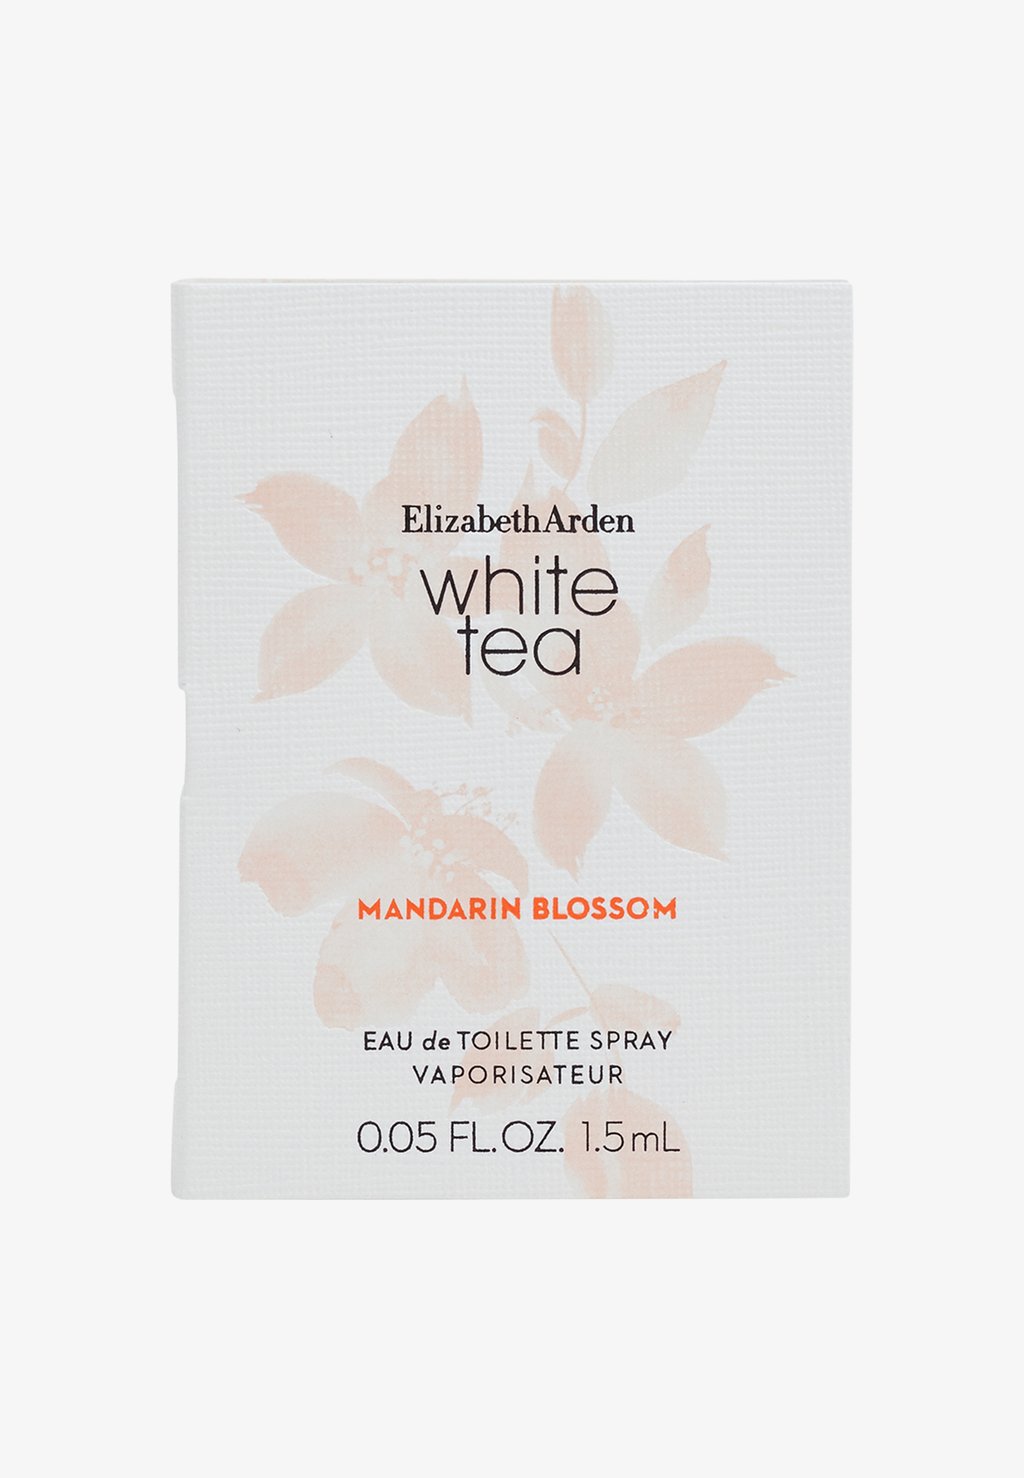 Туалетная вода White Tea Mandarin Blossom Edt Elizabeth Arden elizabeth arden туалетная вода white tea mandarin blossom 30 мл